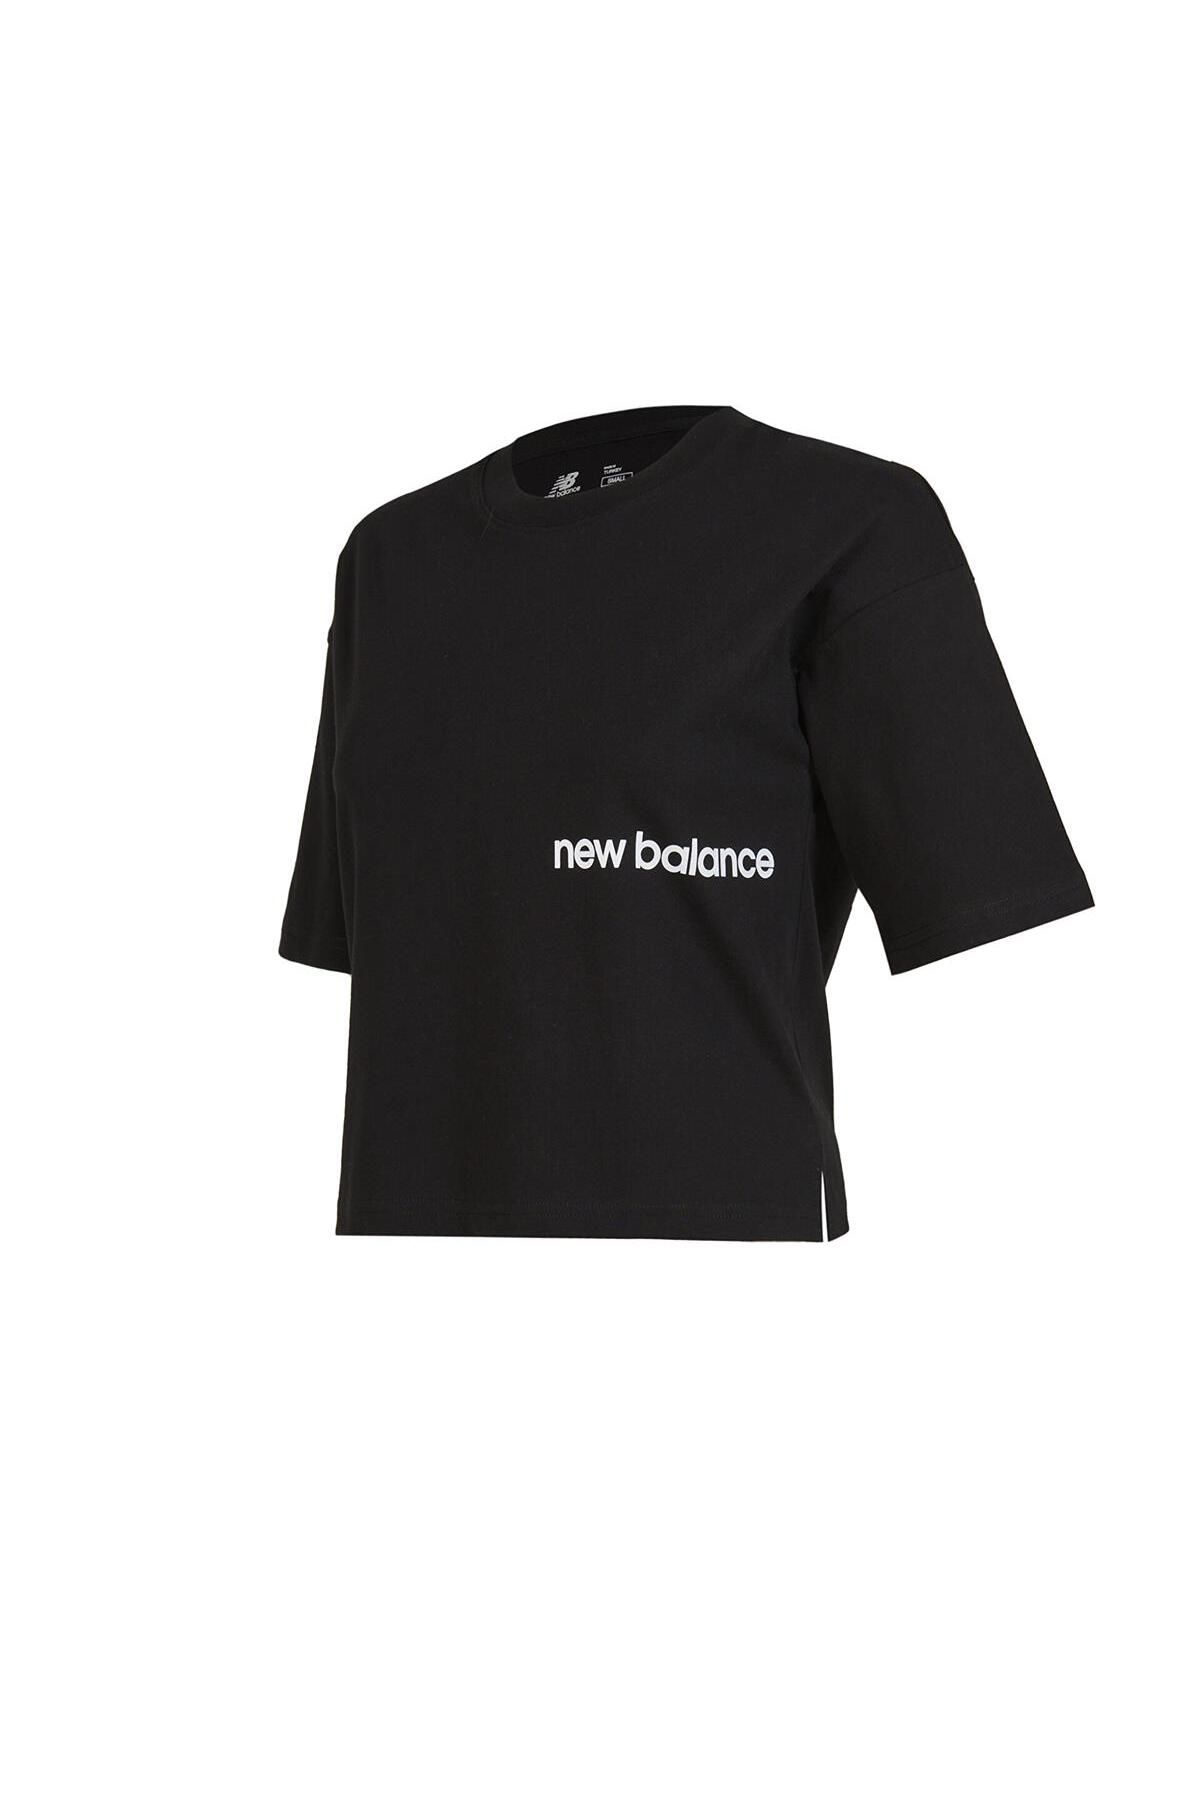 New Balance Nb Woman Lifestyle T-shirt Kadın T-shirt